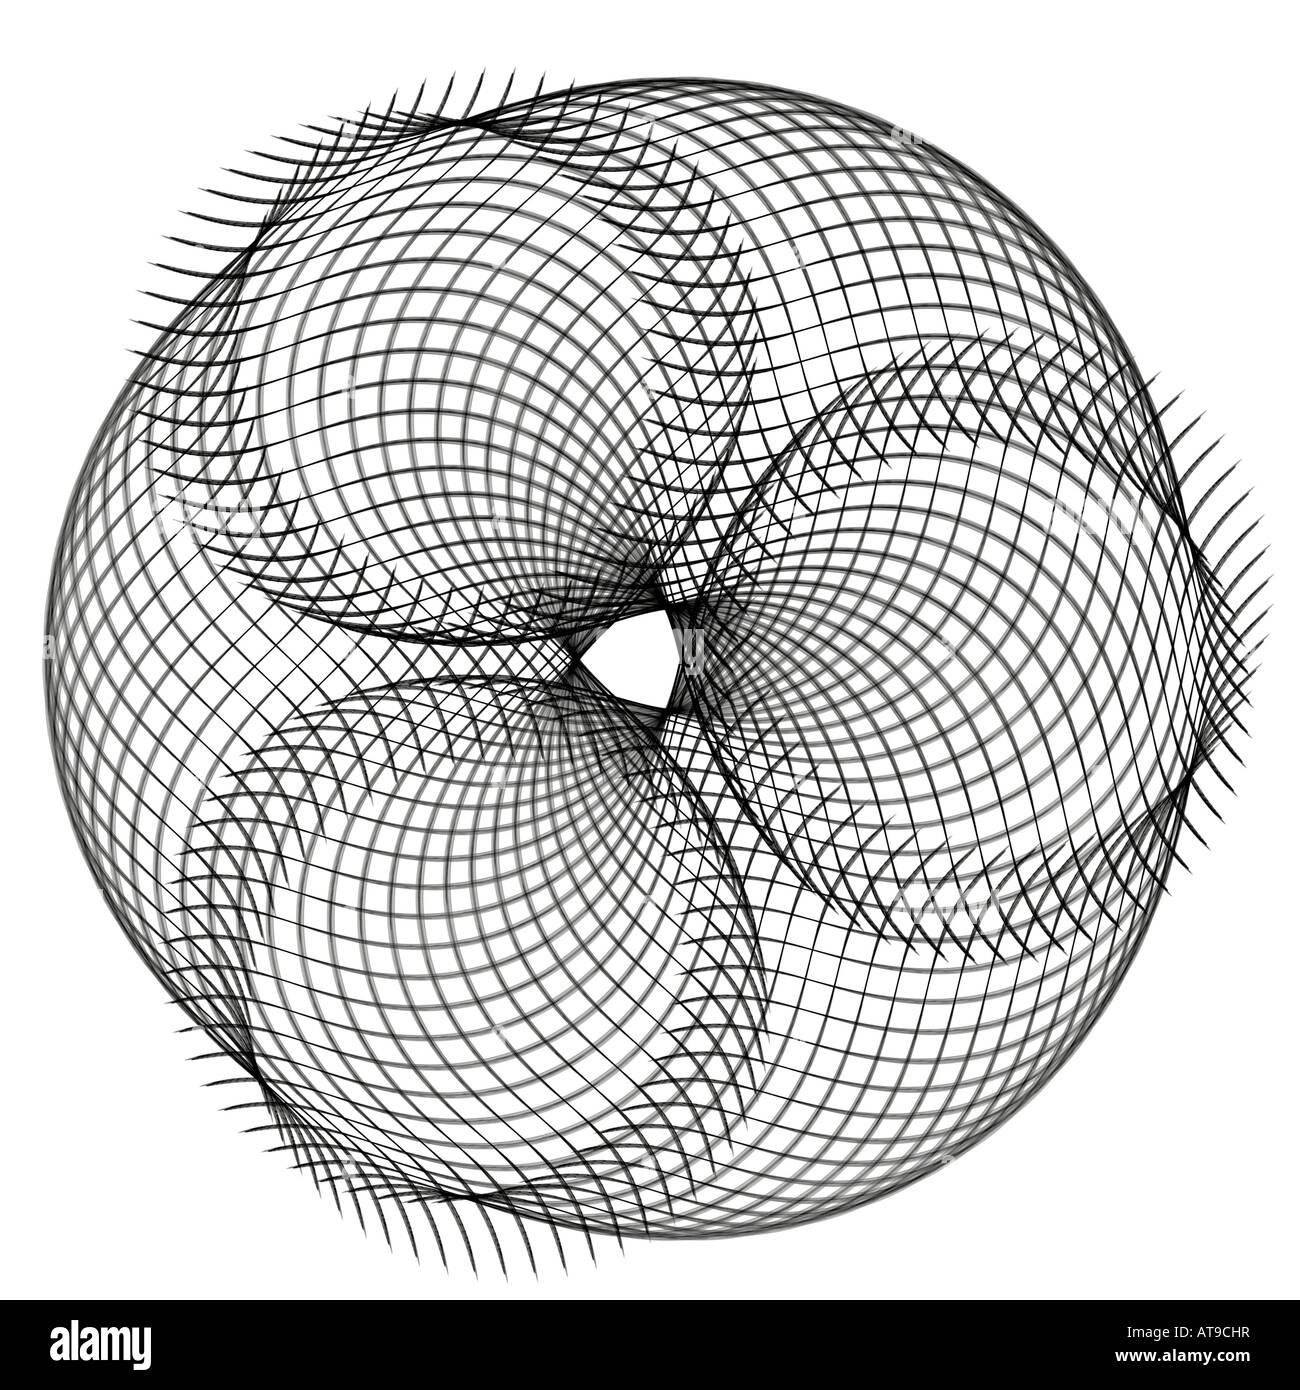 Abstract fractal image resembling a frayed mesh ball Stock Photo